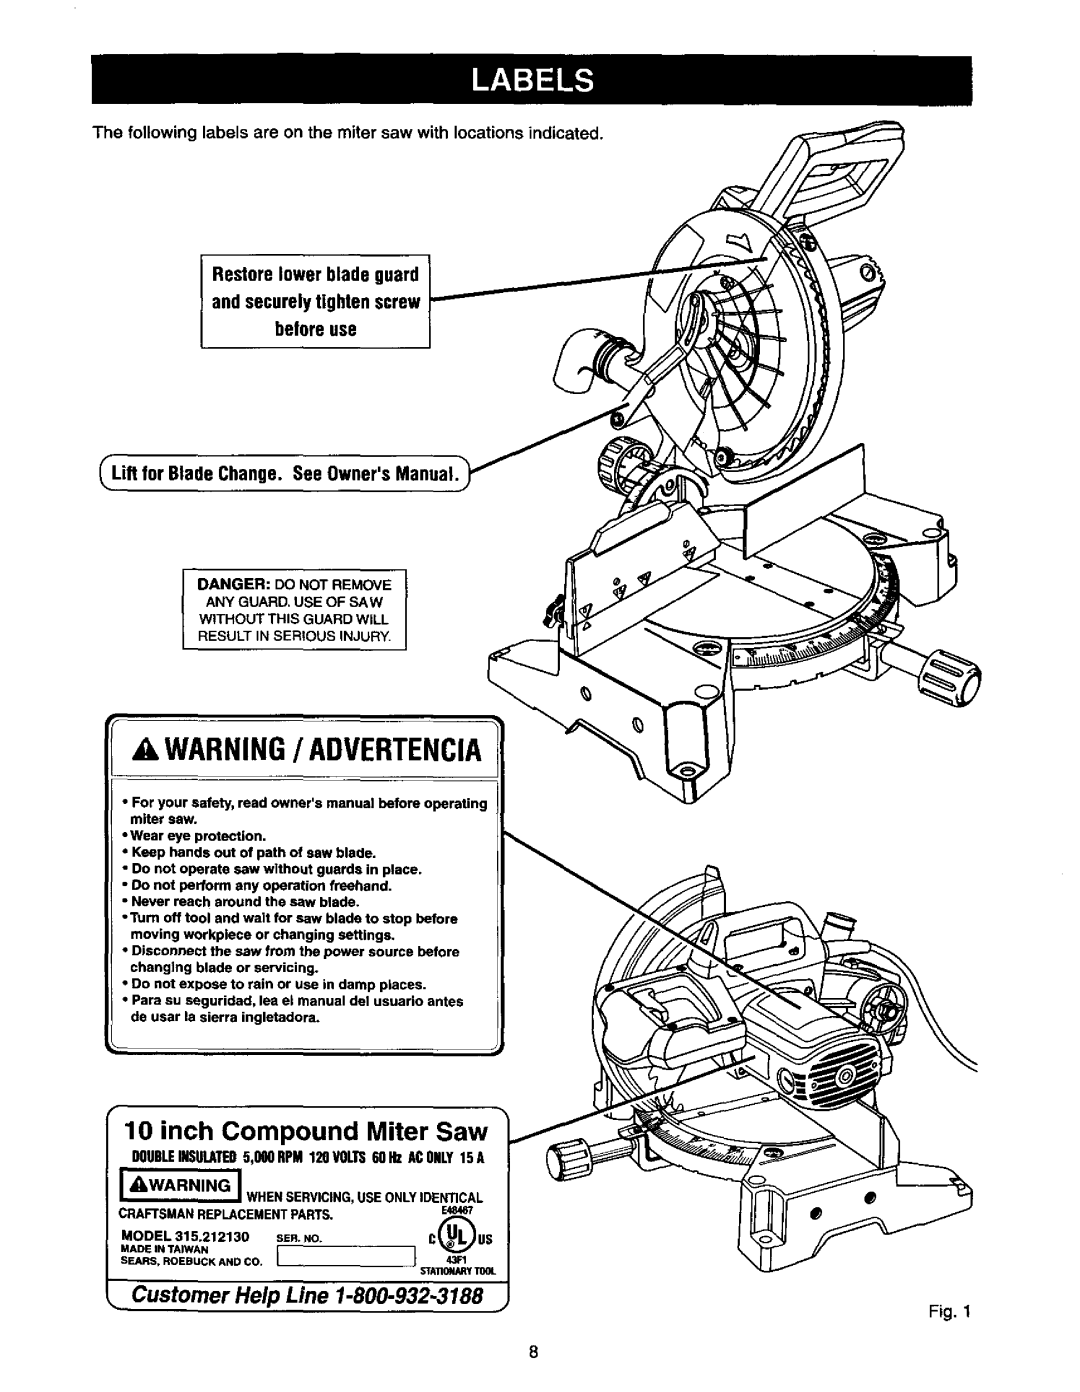 Craftsman 315.21213 manual Awarning/ Advertencia, inch Compound Miter Saw, Customer Help Line, C_ULus 